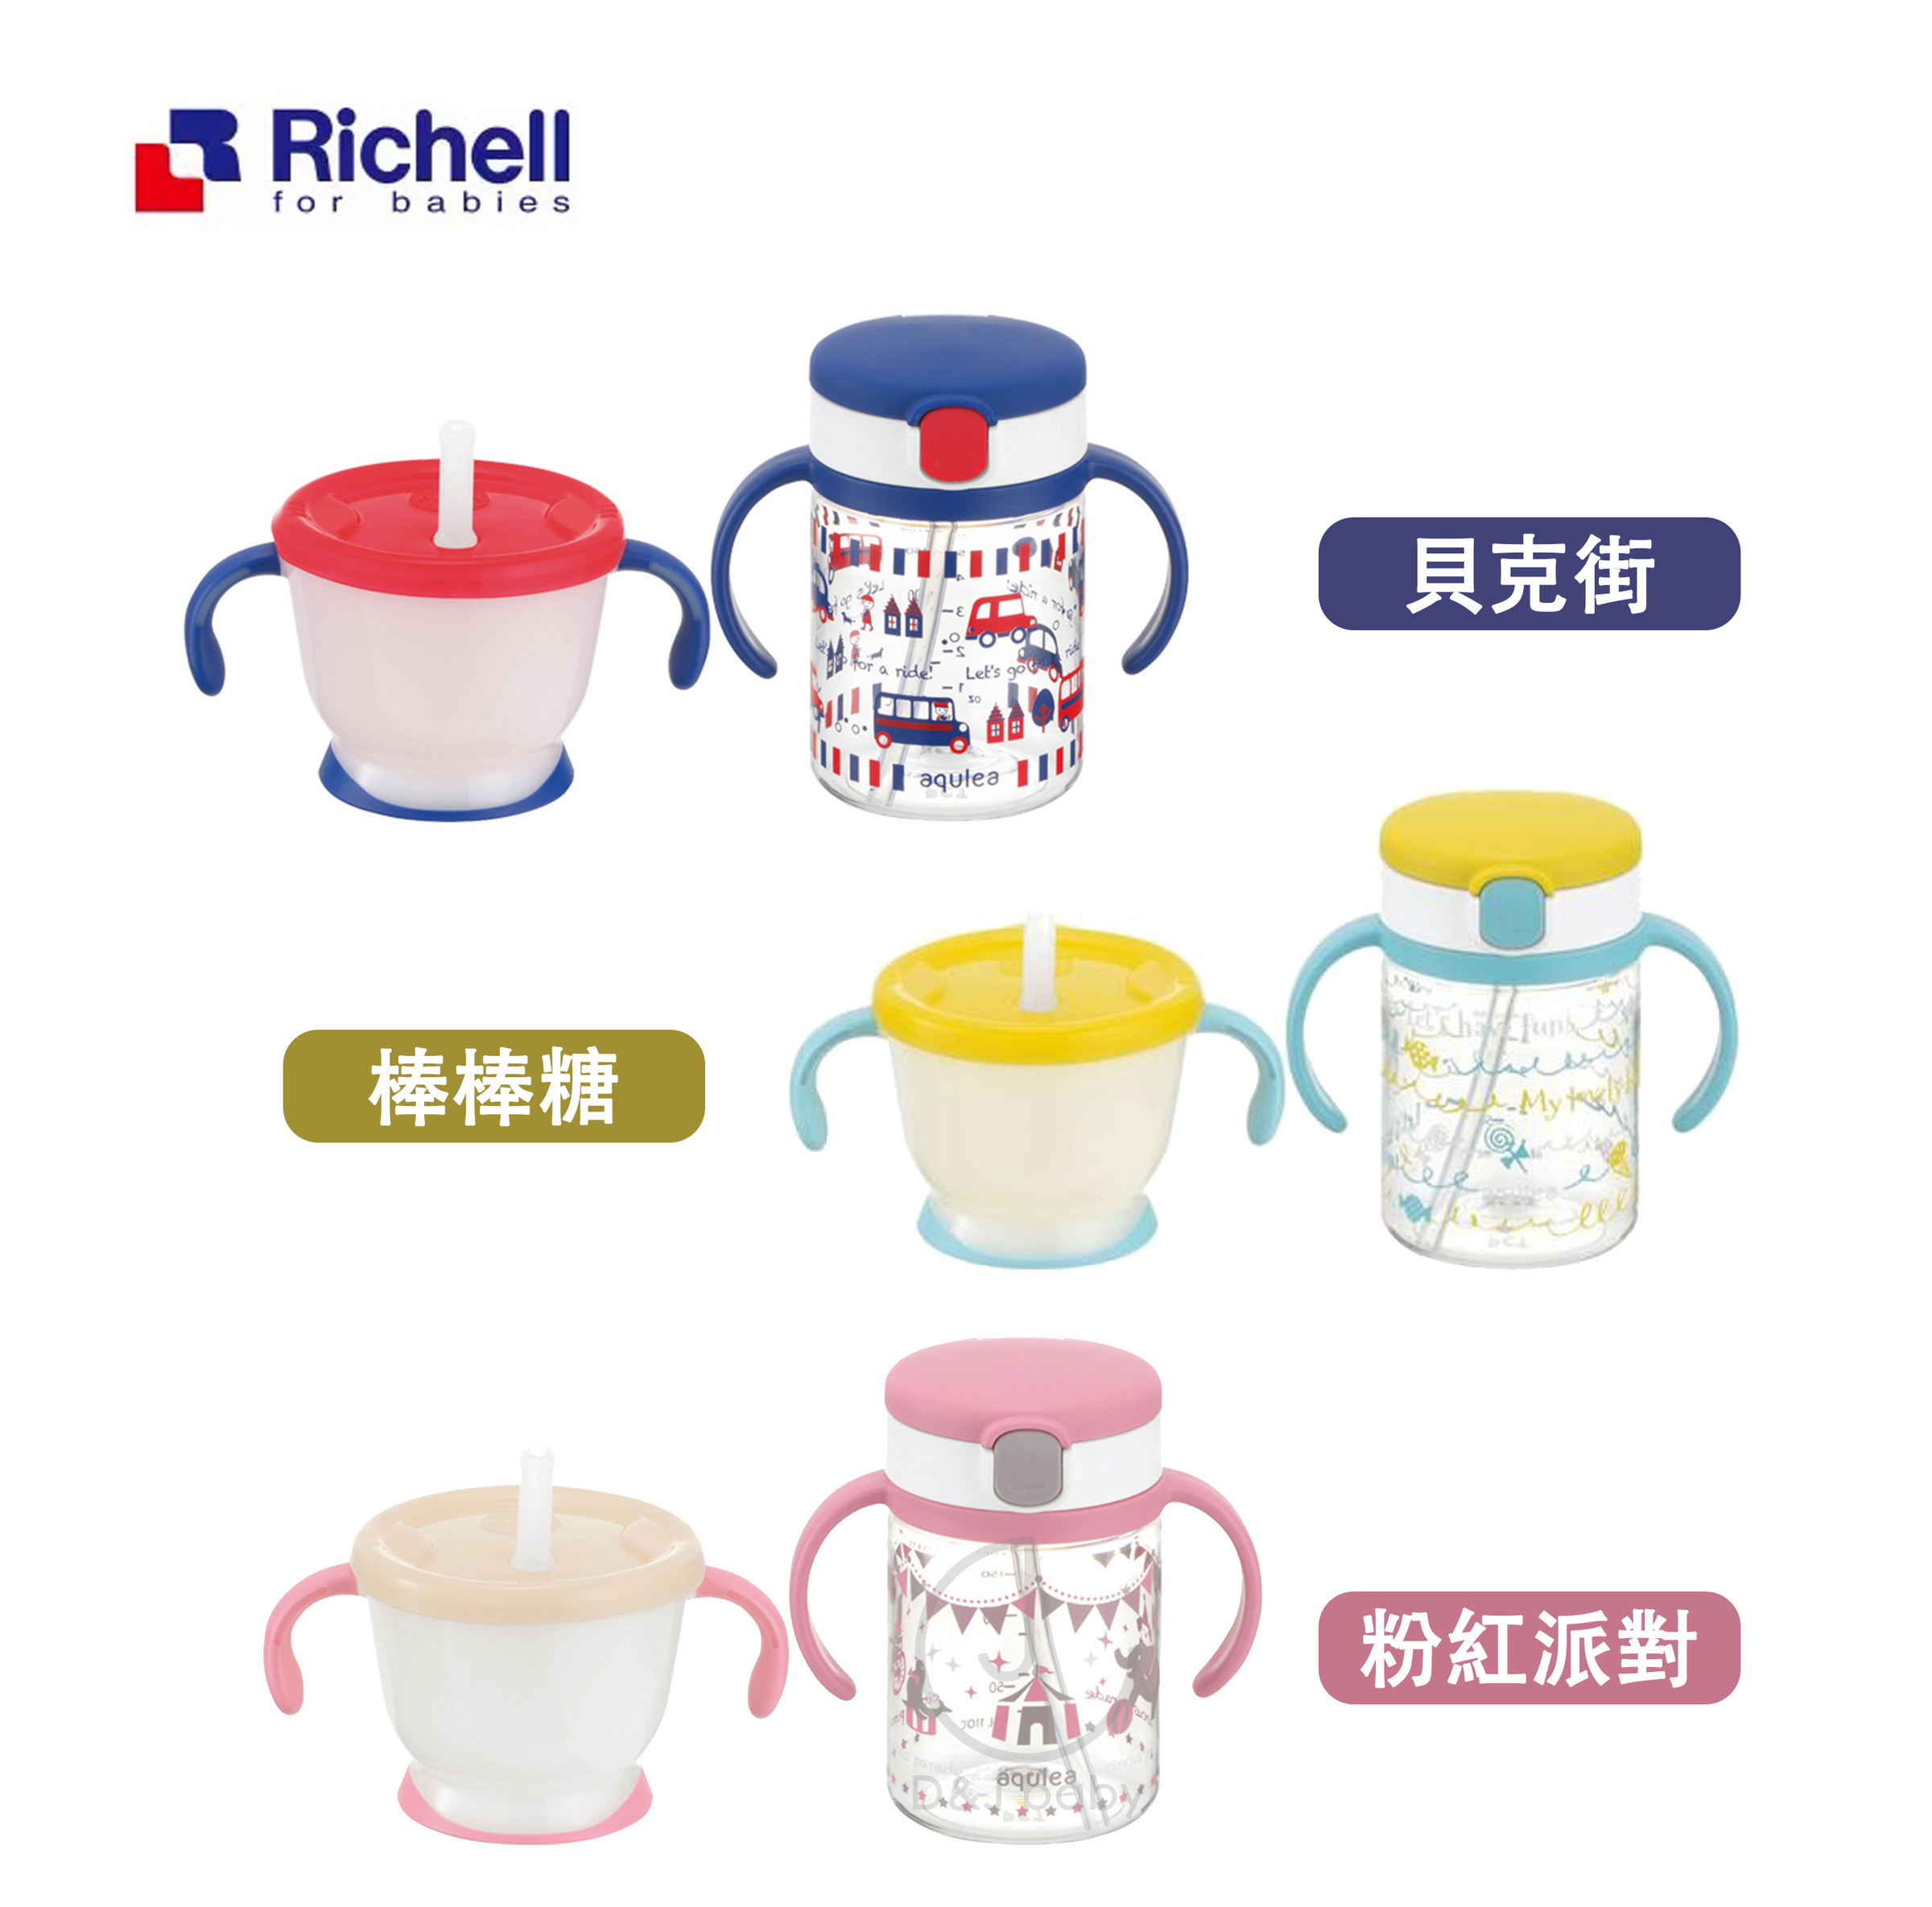 Richell 經典150ml訓練杯+冷水壺「200ml」吸管杯套裝組 - D&J baby